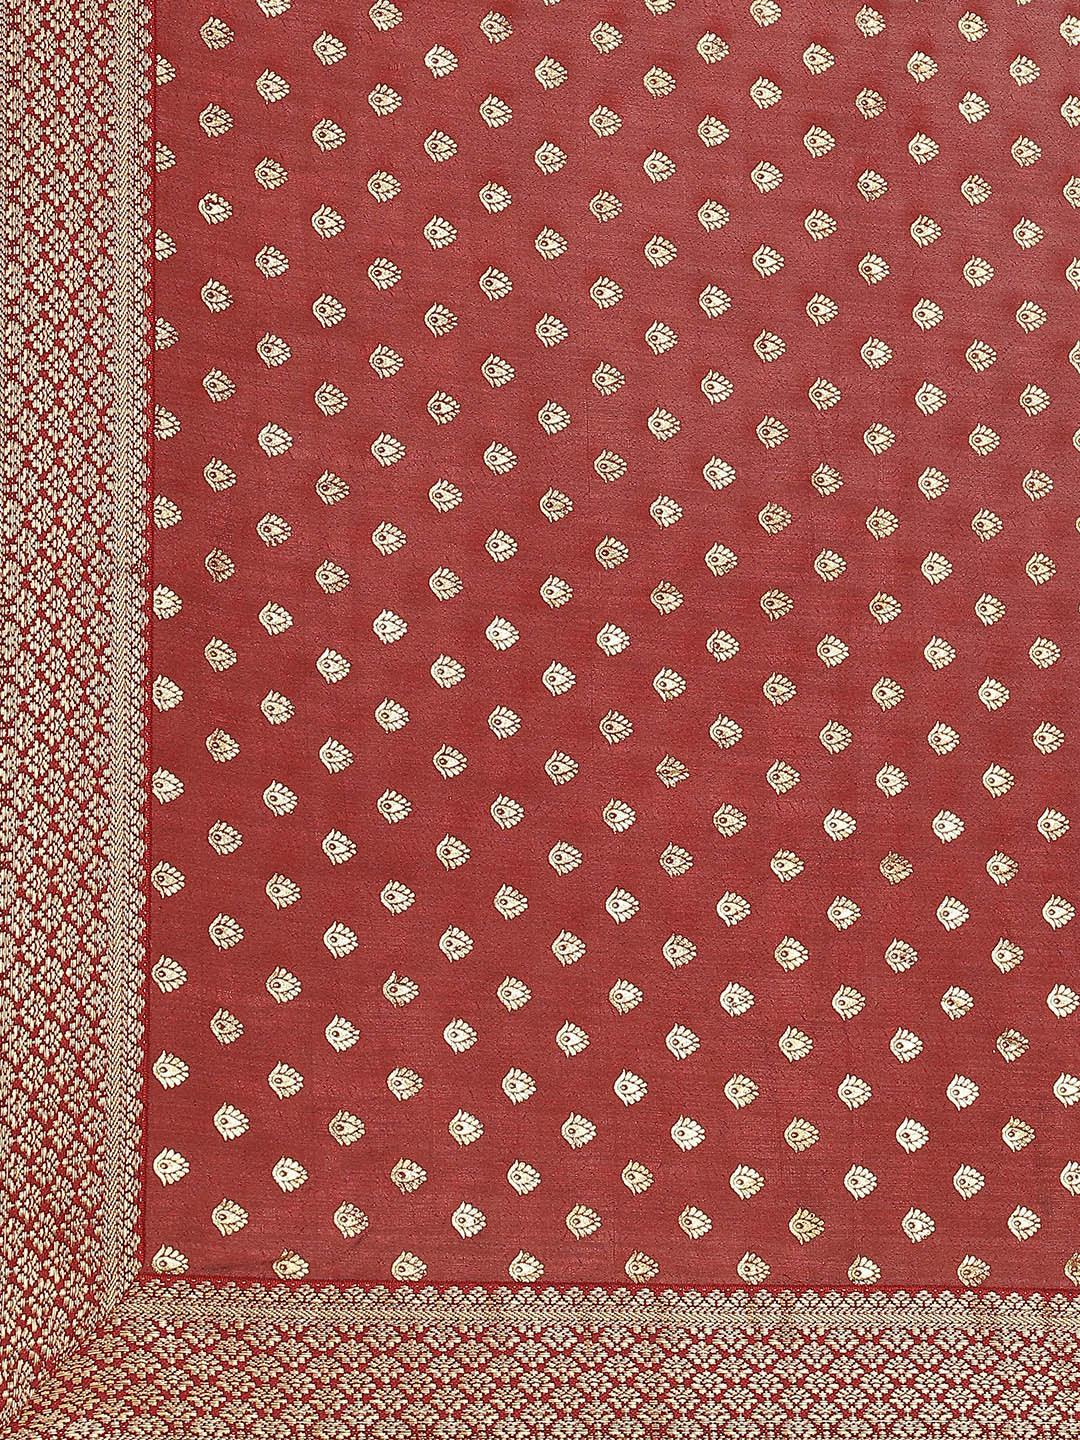 Maroon Printed Polyester Saree - Libas